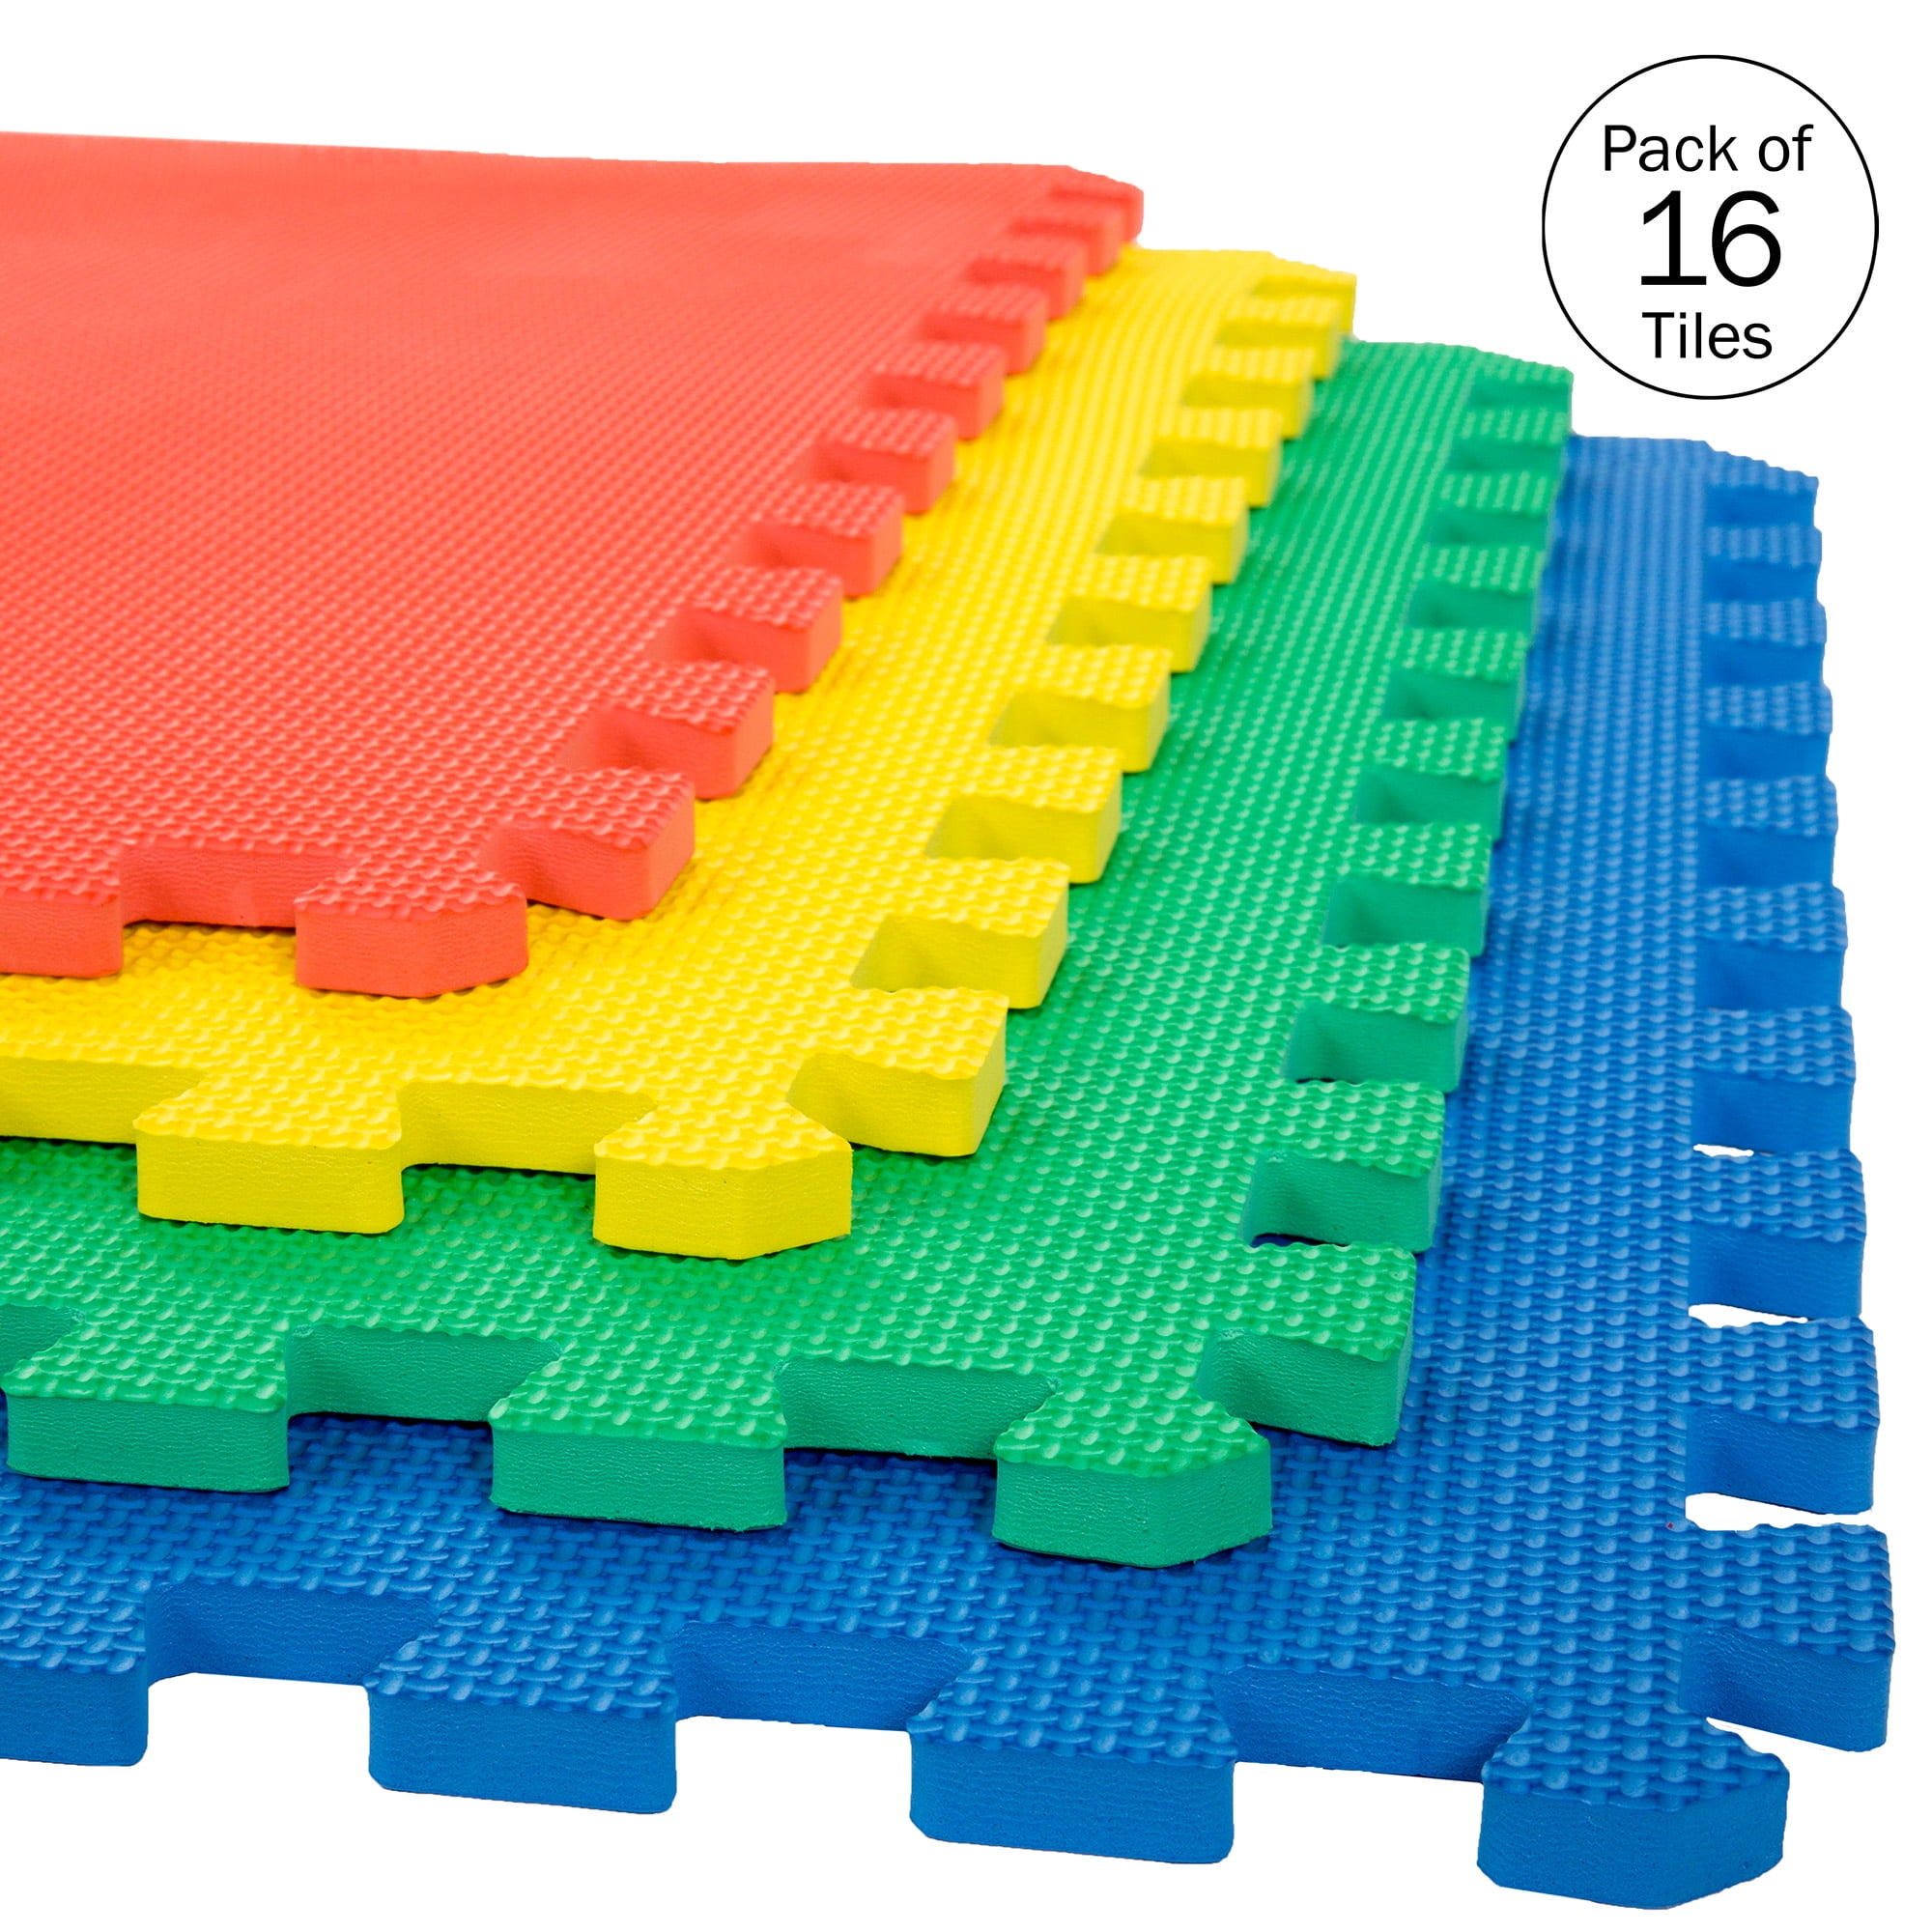 Stalwart Foam Mat Floor Tiles, Interlocking EVA Foam Padding Soft Flooring  for Exercising, Yoga, Camping, Kids, Babies, Playroom - 4 Pack 